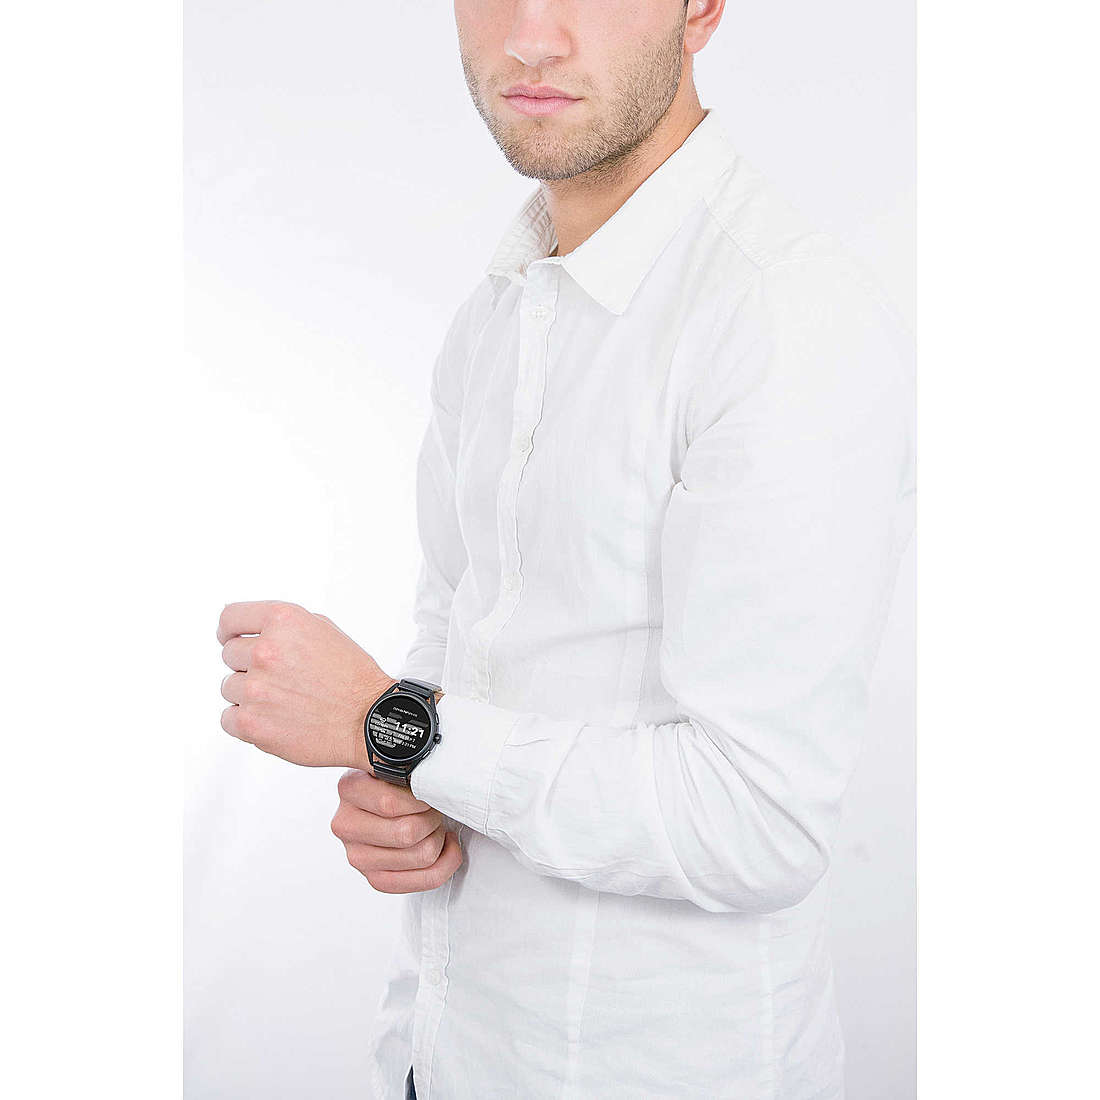 Emporio Armani Smartwatches man ART5020 wearing